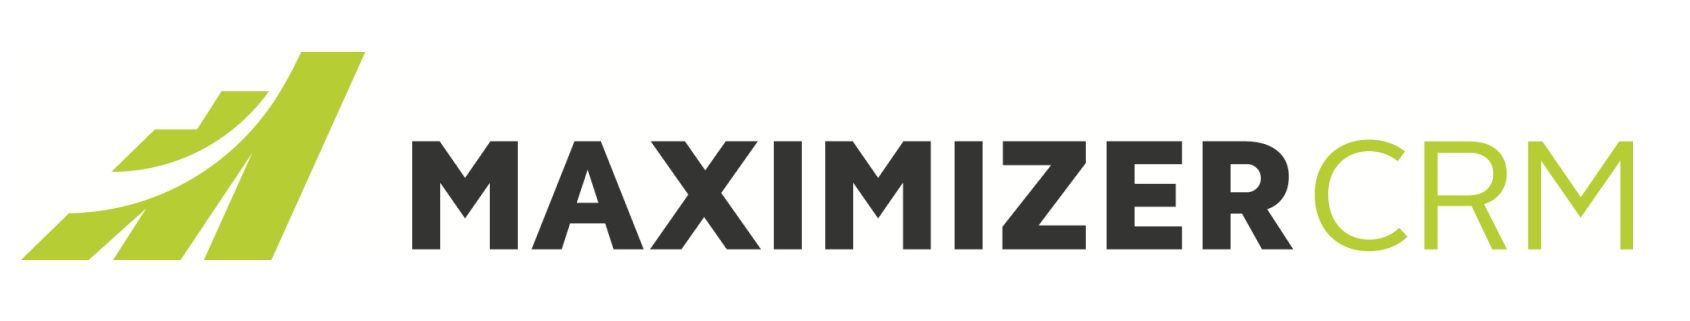 Maximizer CRM - logo